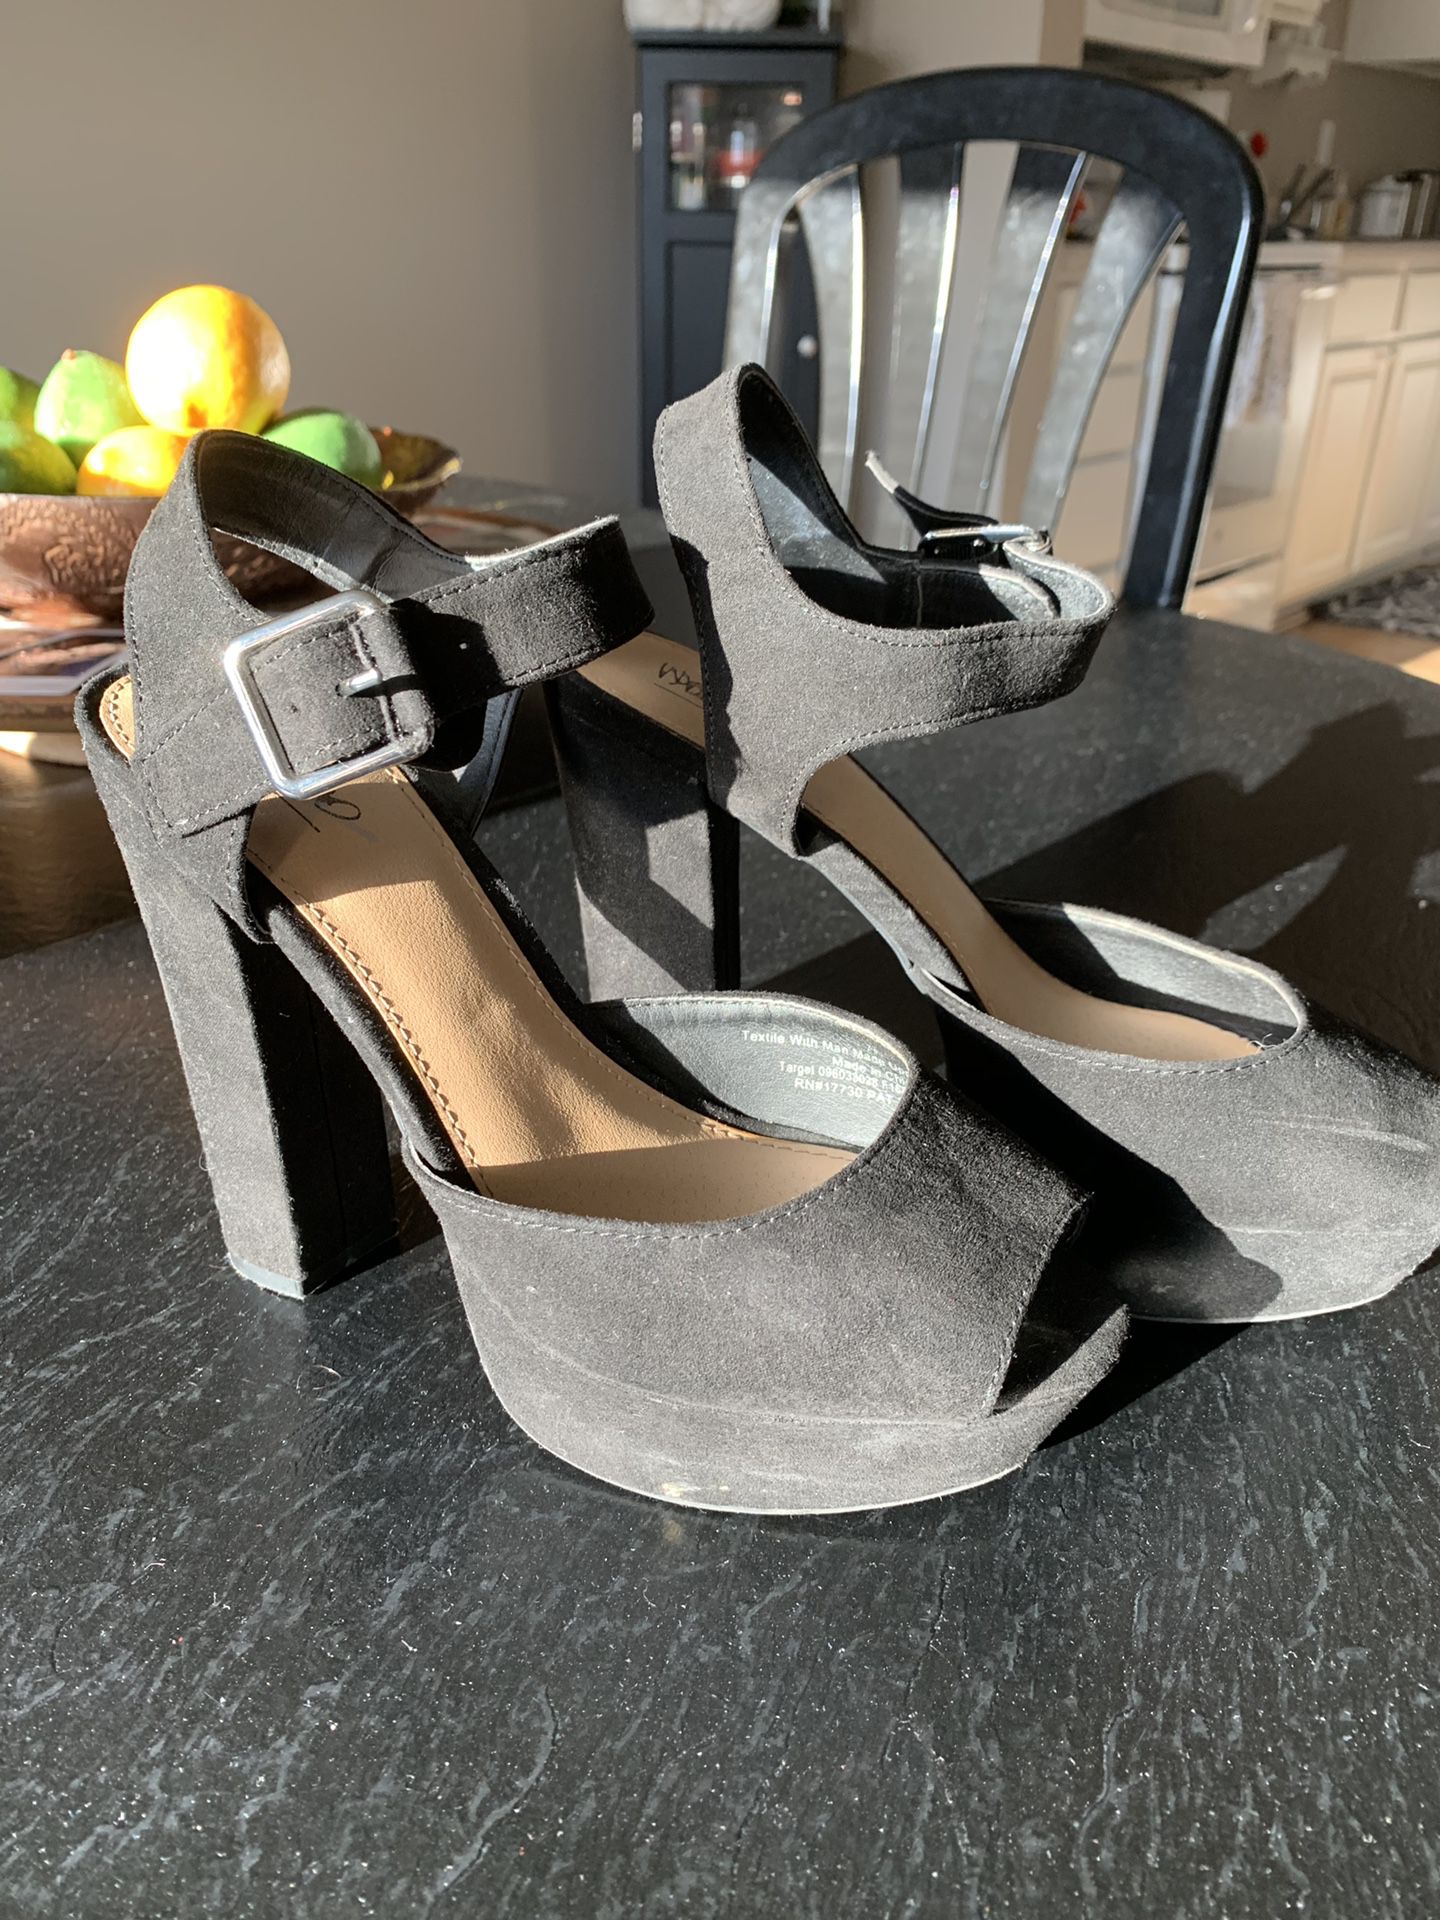 Size 7.5 black heels